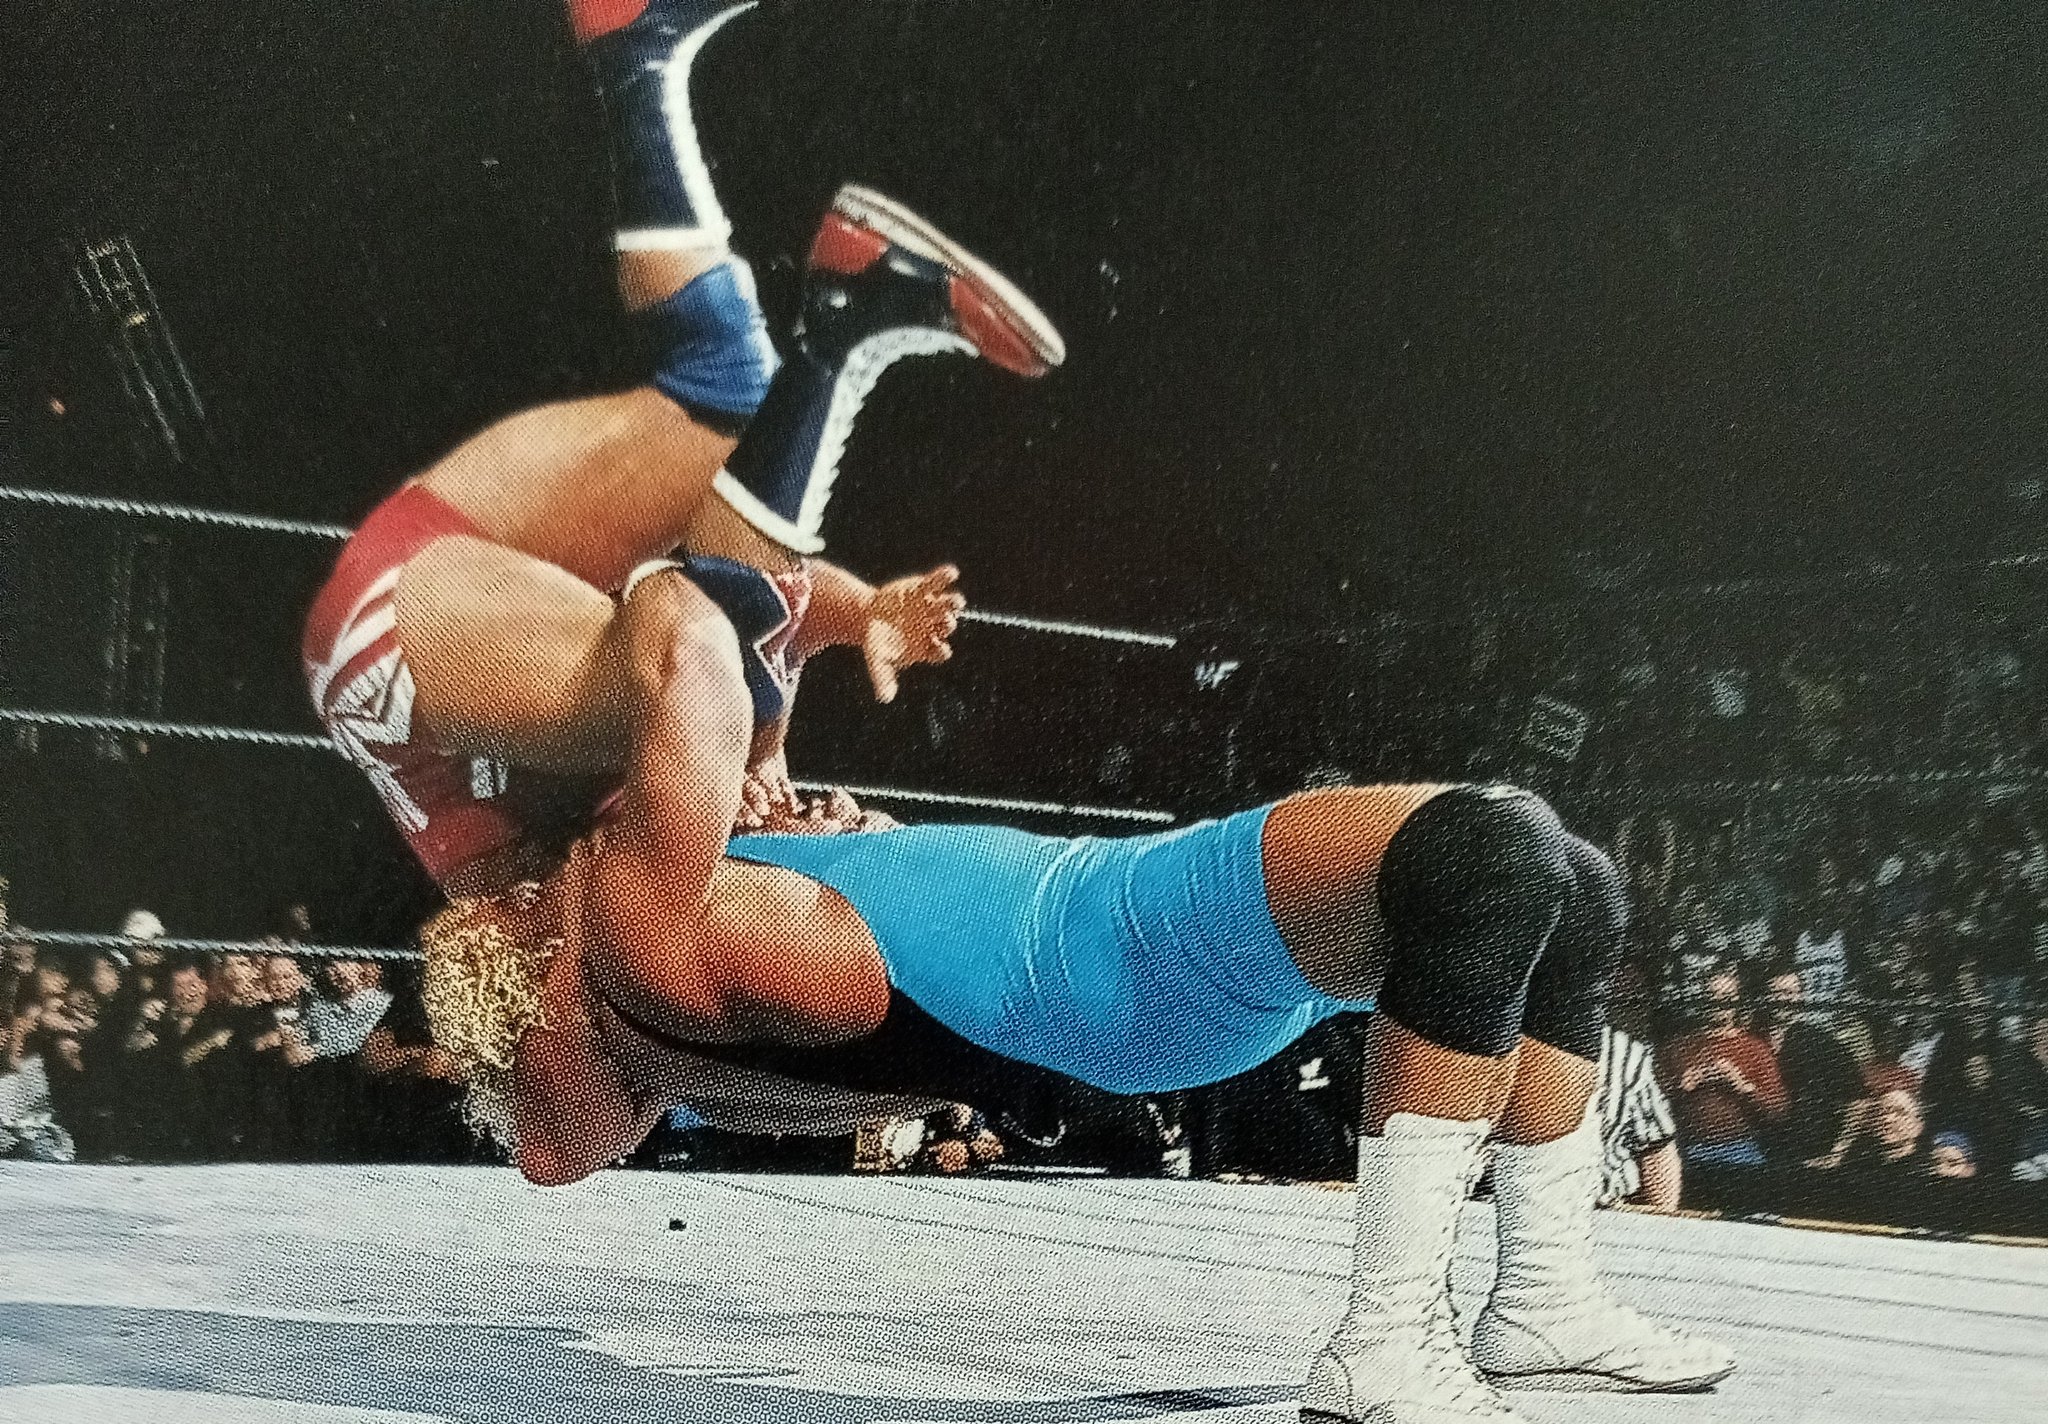 Mr. Perfect performing Perfect Plex on Kurt Angle at the 2002 Royal Rumble